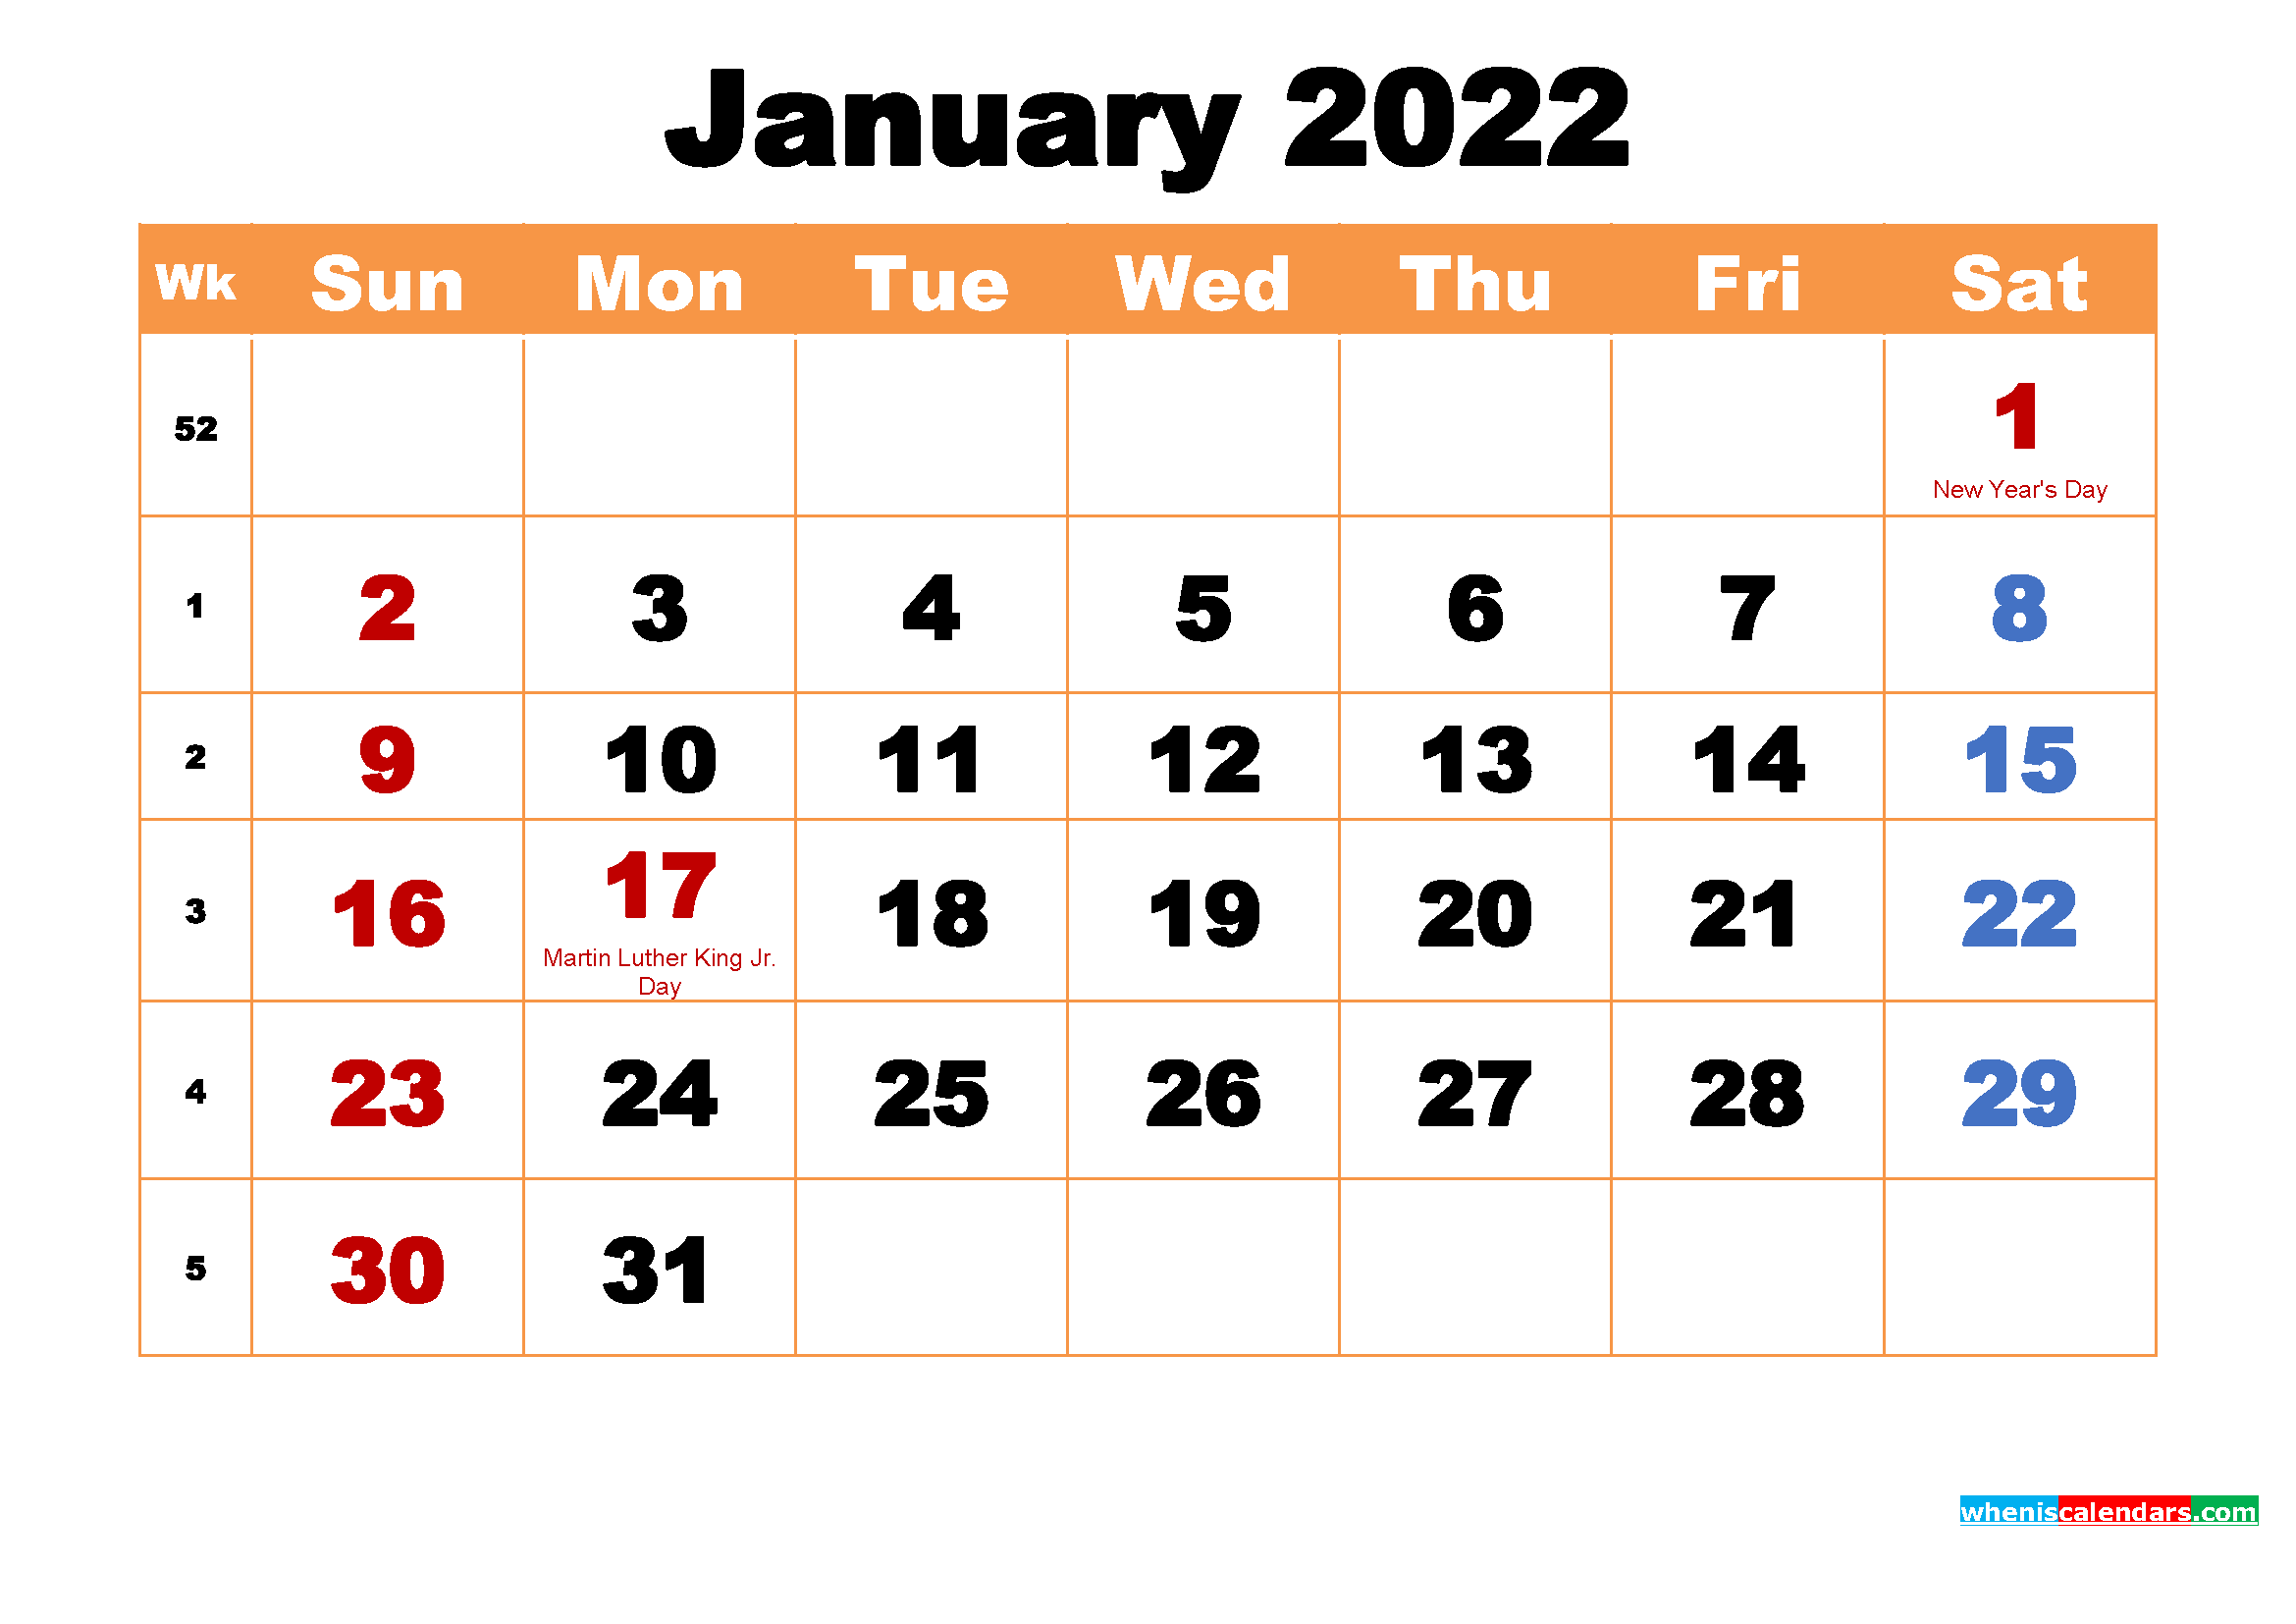 January 2022 Calendar Wallpapers - Top Free January 2022 Calendar Backgrounds - Wallpaperaccess